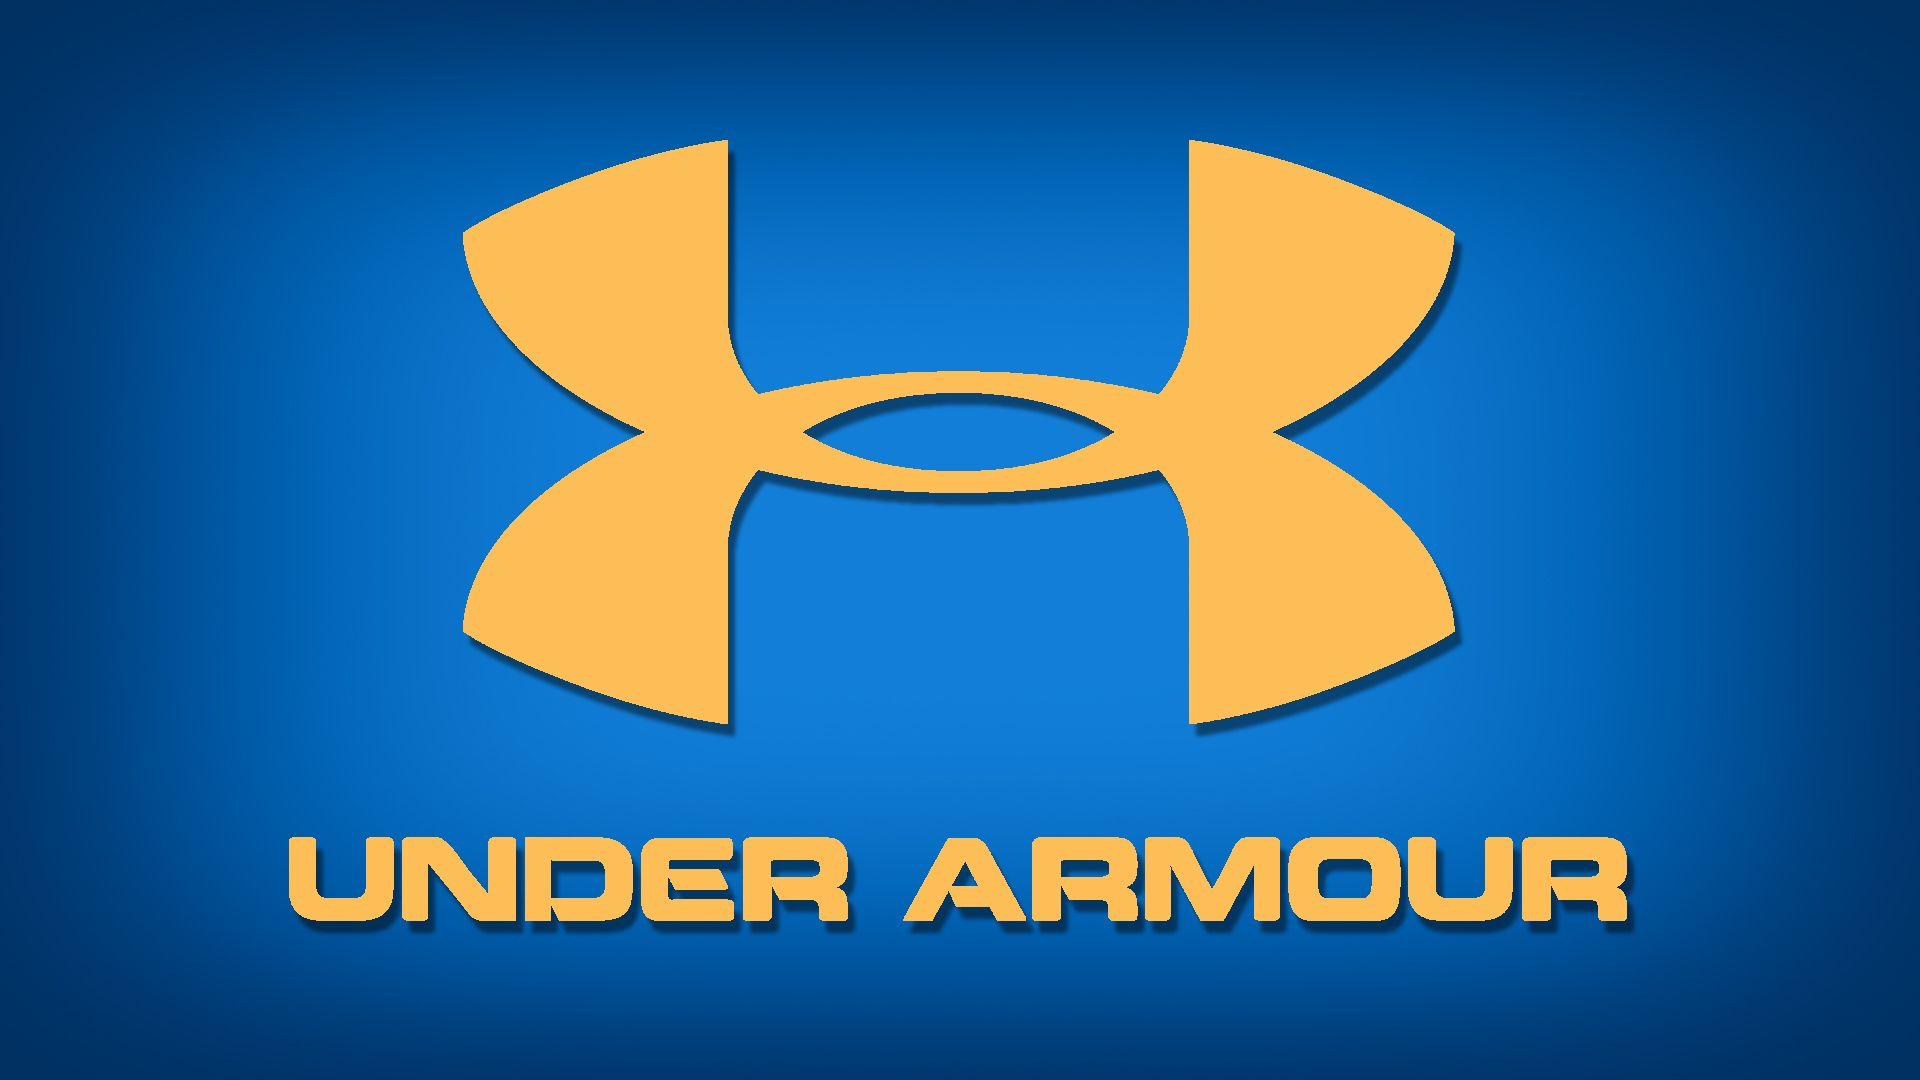 under armour logo orange and blue